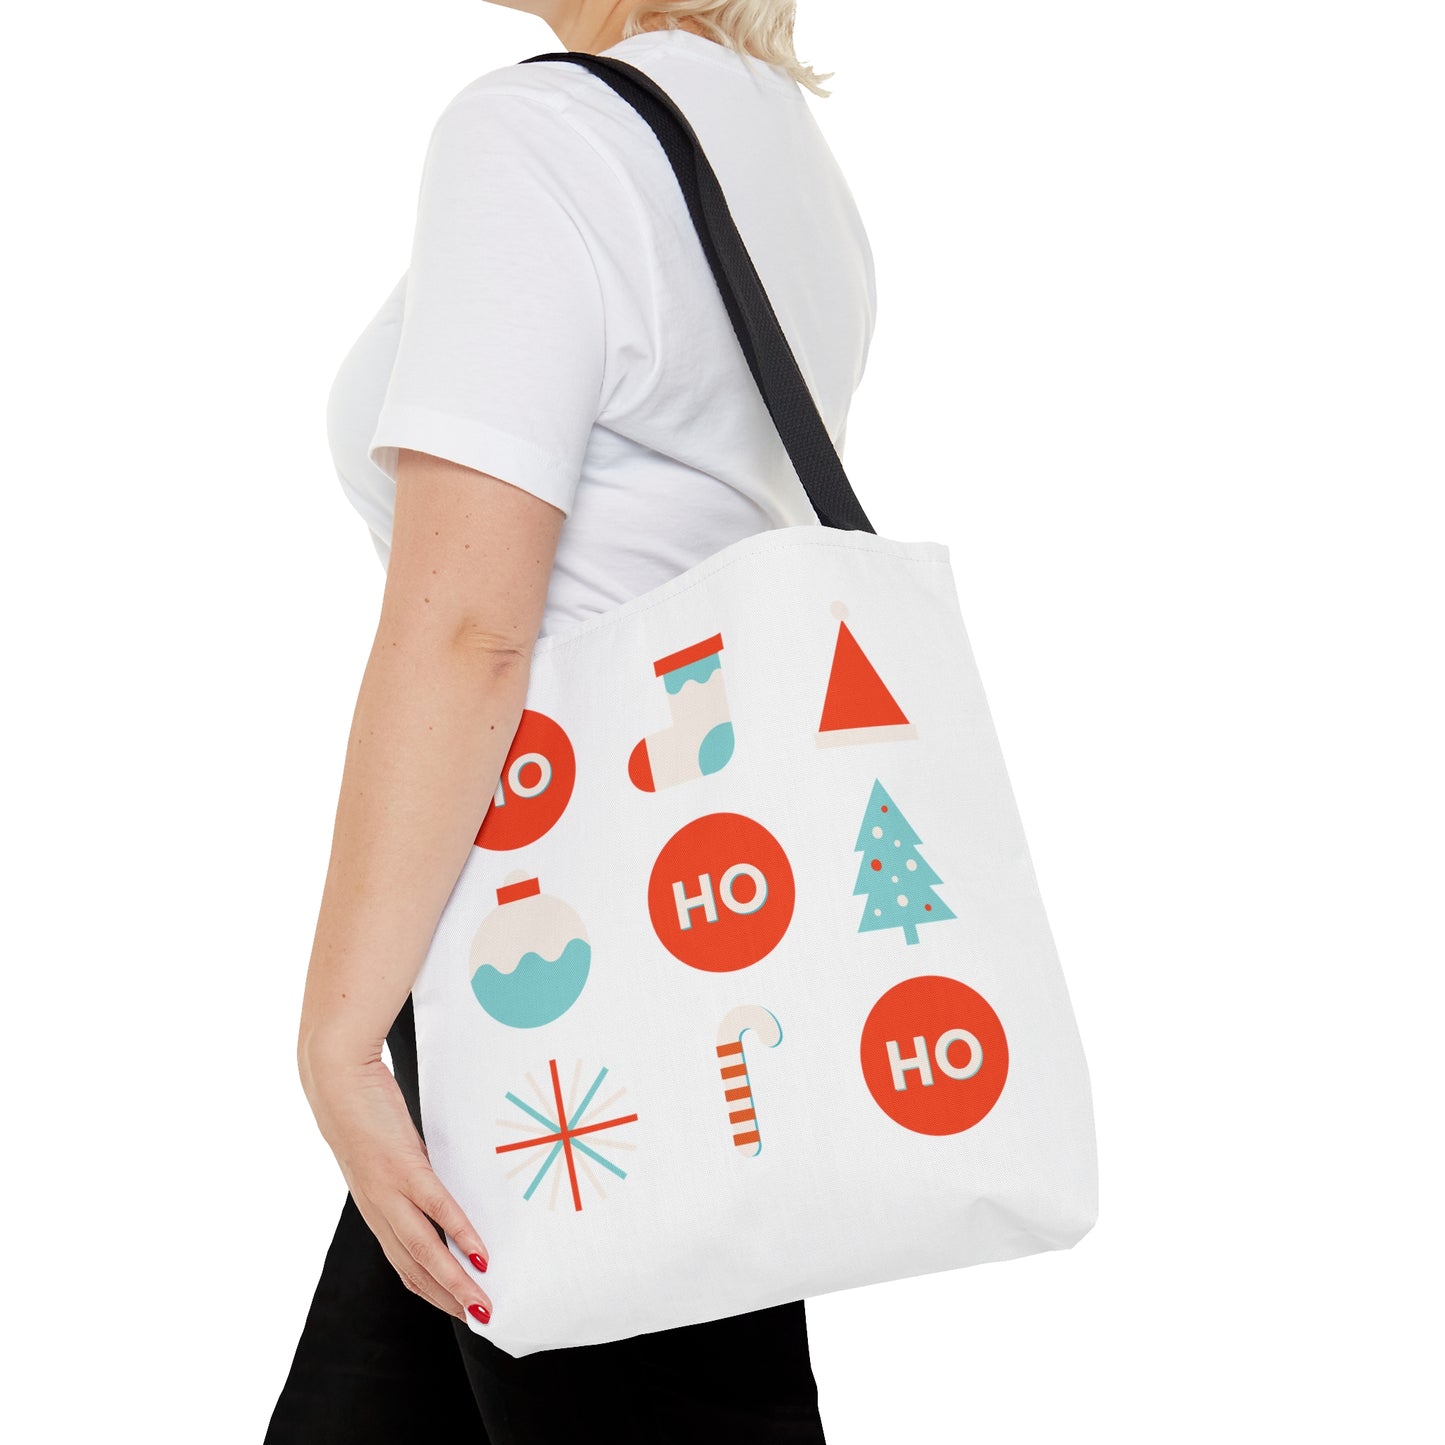 Merry Christmas Tote Bags, Reusable Tote Bags with Ho Ho Printed